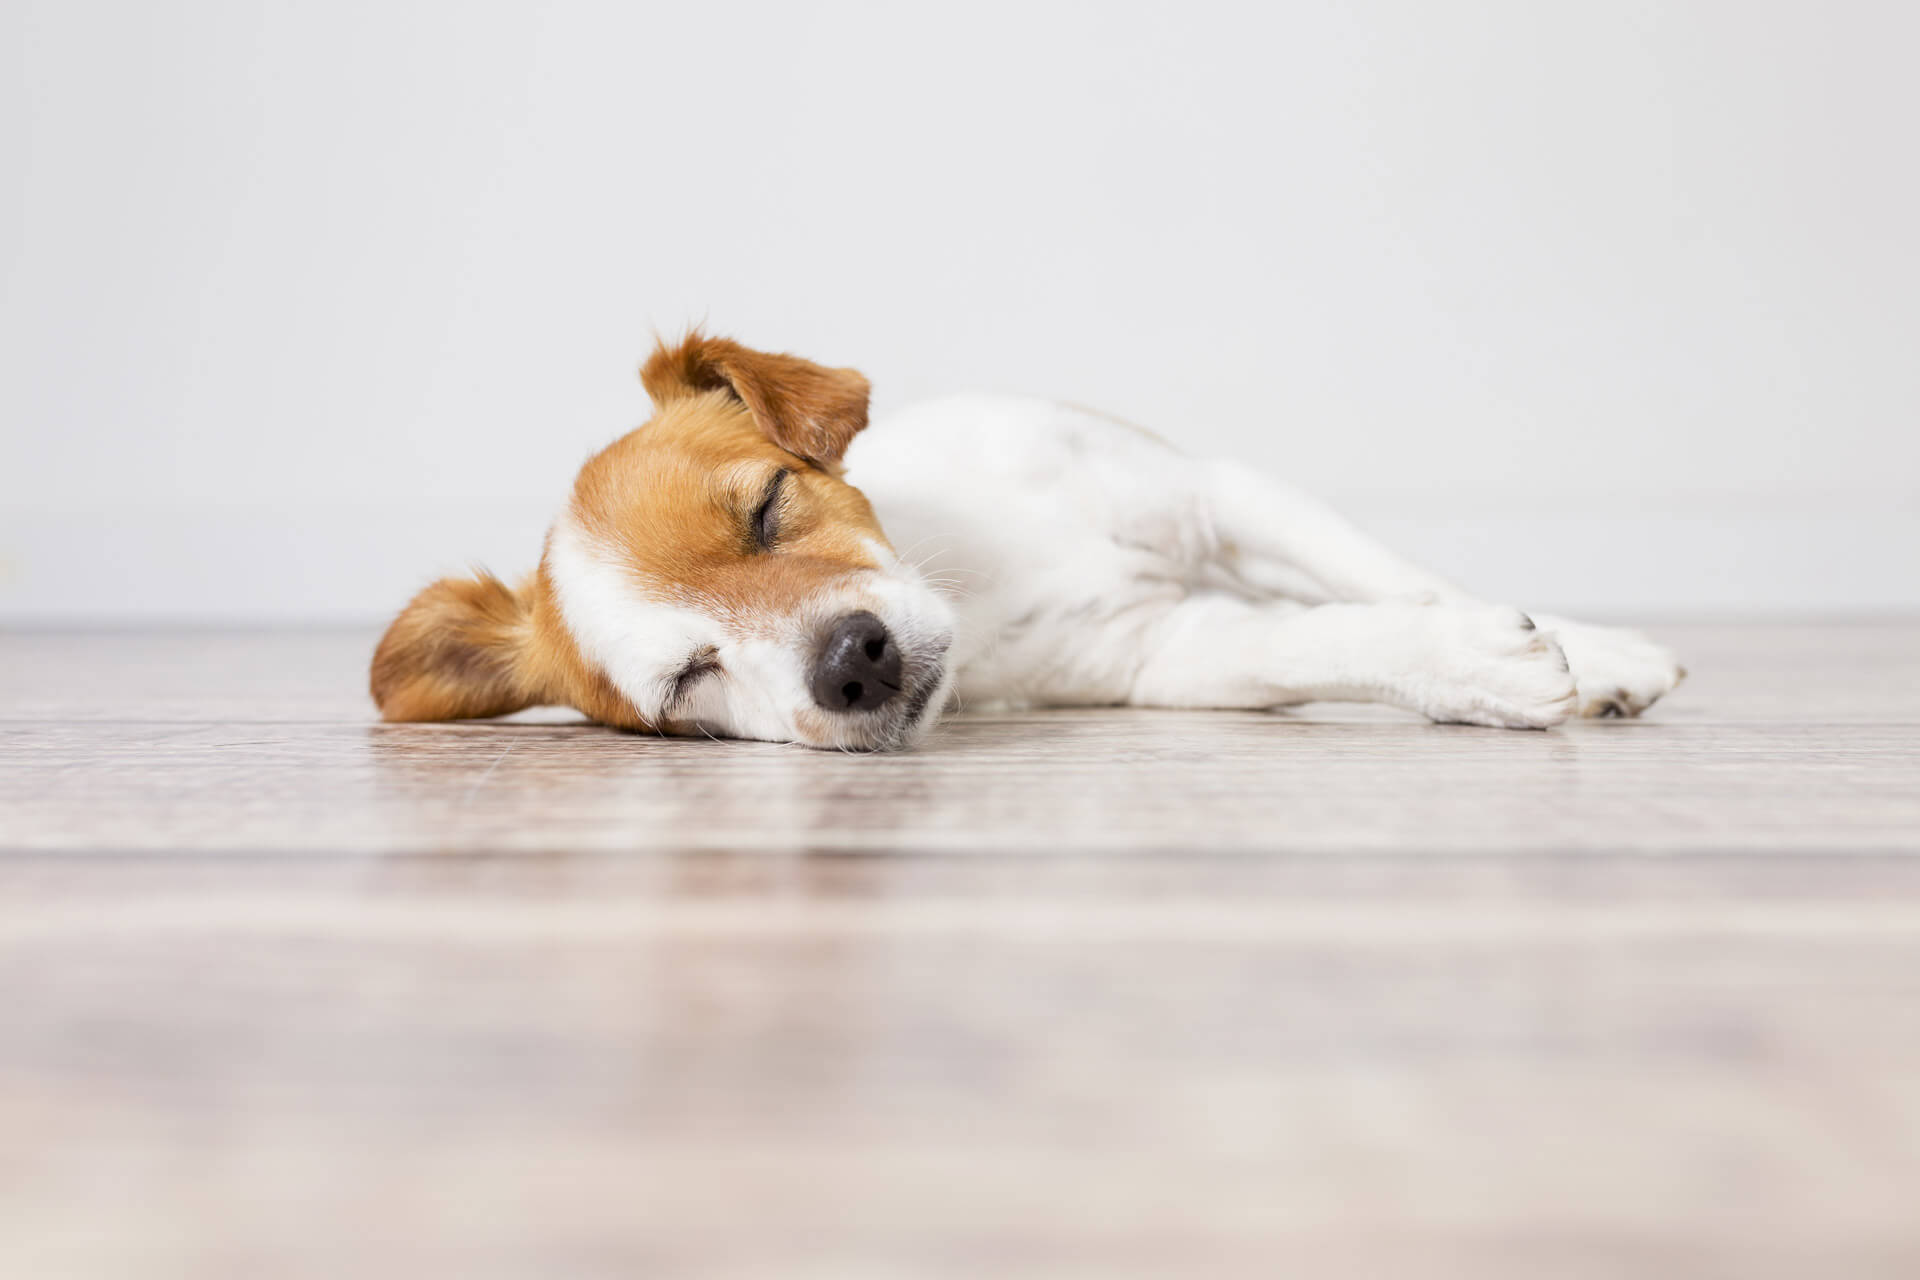 cane bianco e marrone dorme steso sul pavimento